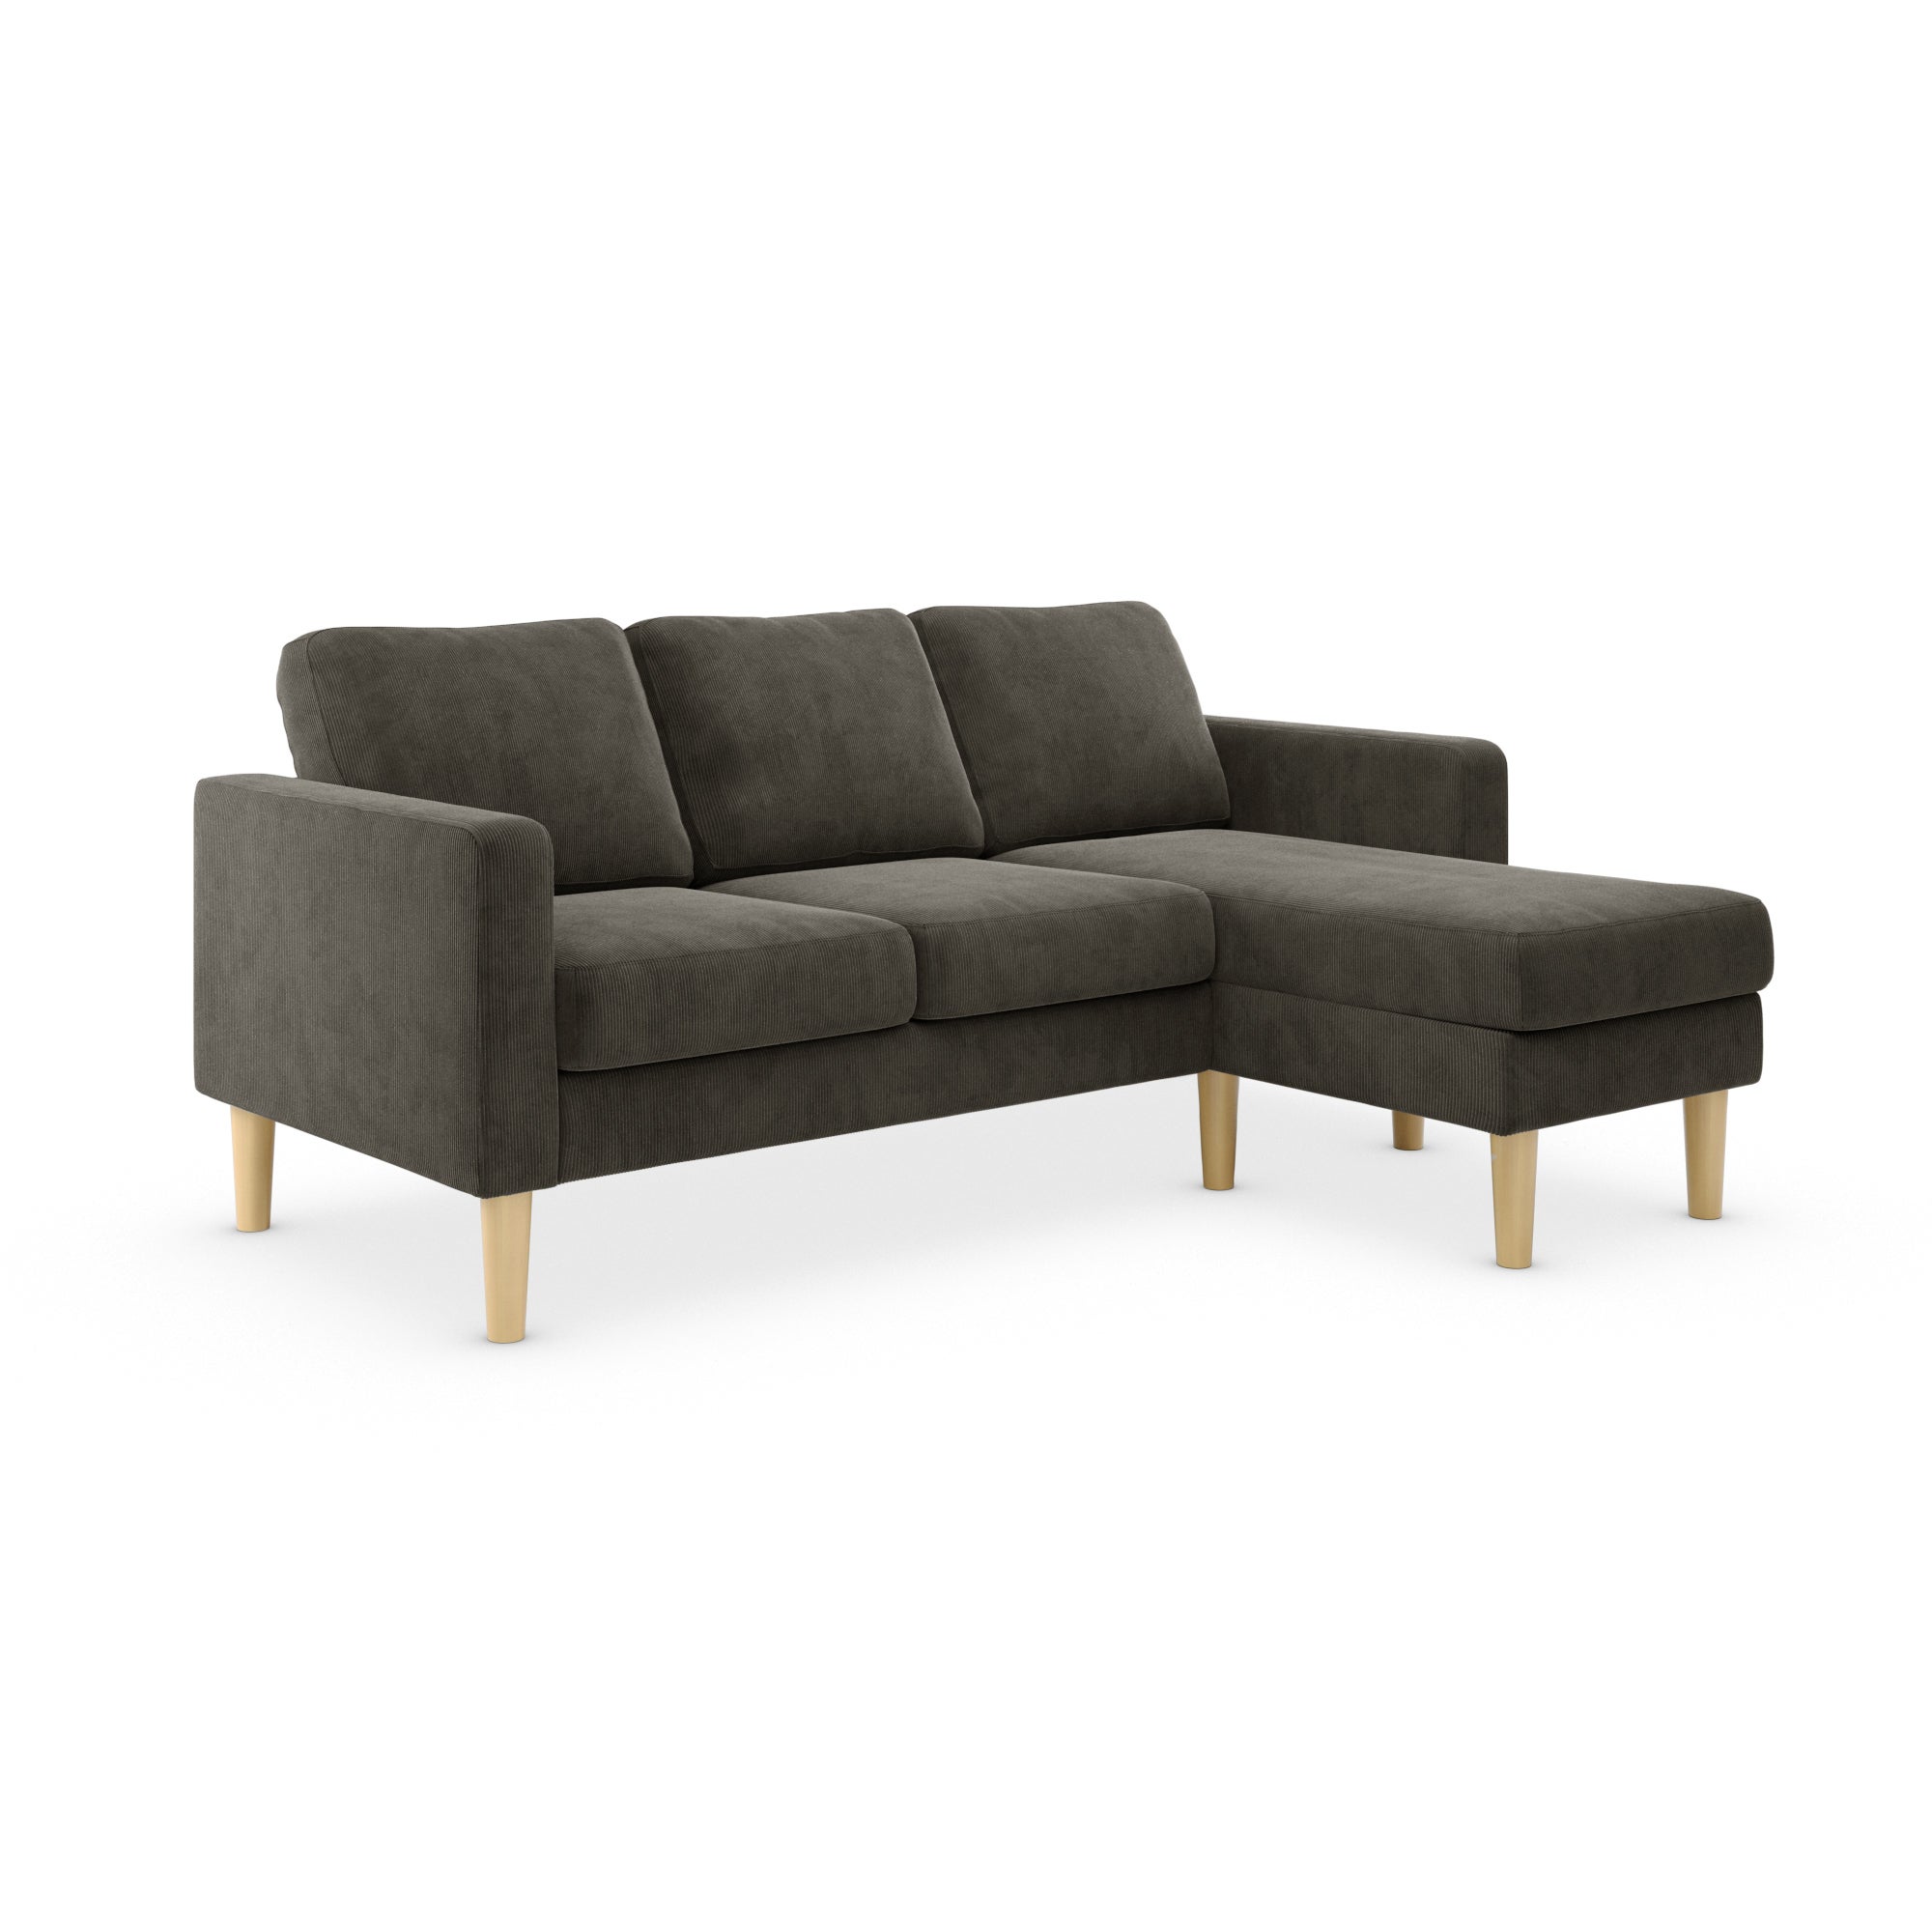 Jacob Cord Compact Corner Chaise Sofa | Dunelm